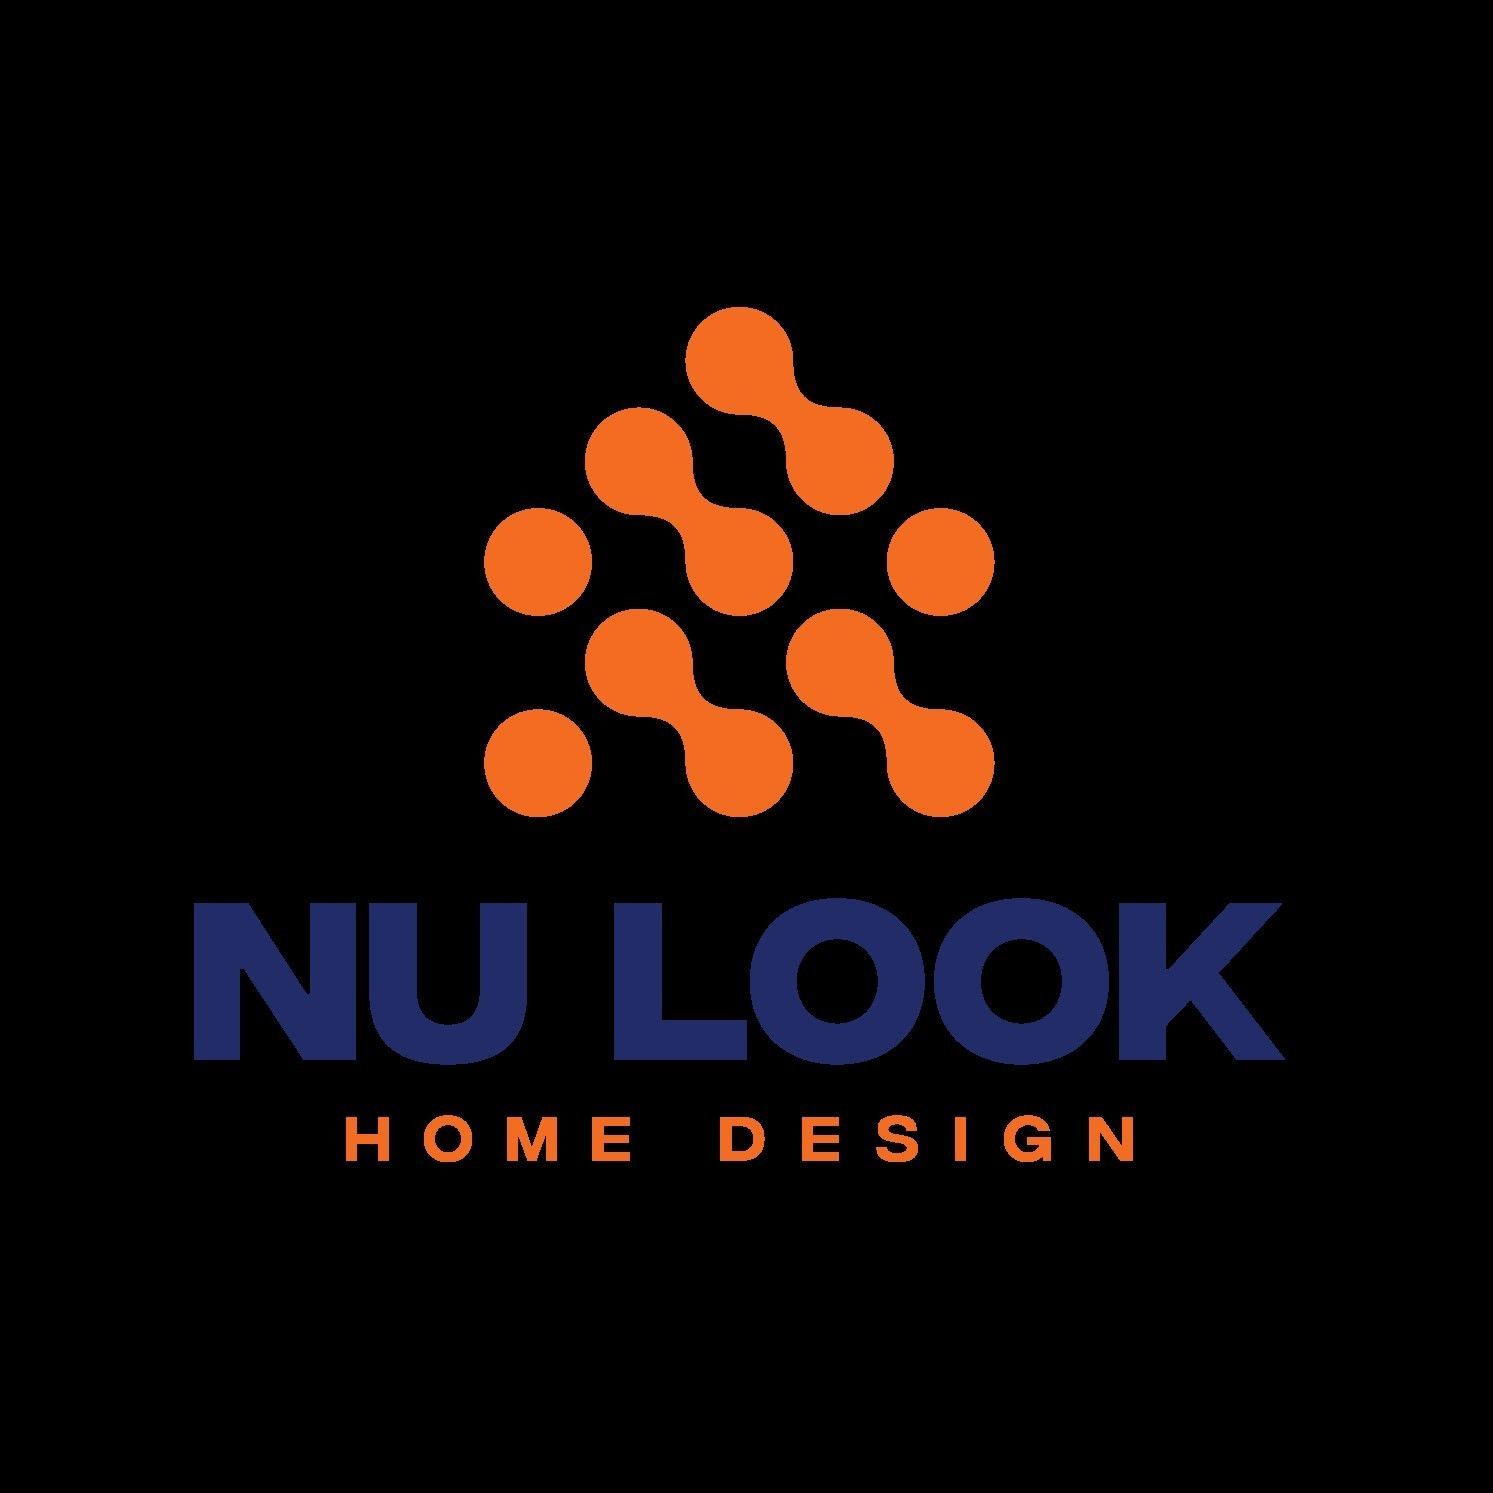 NuLook Home Design